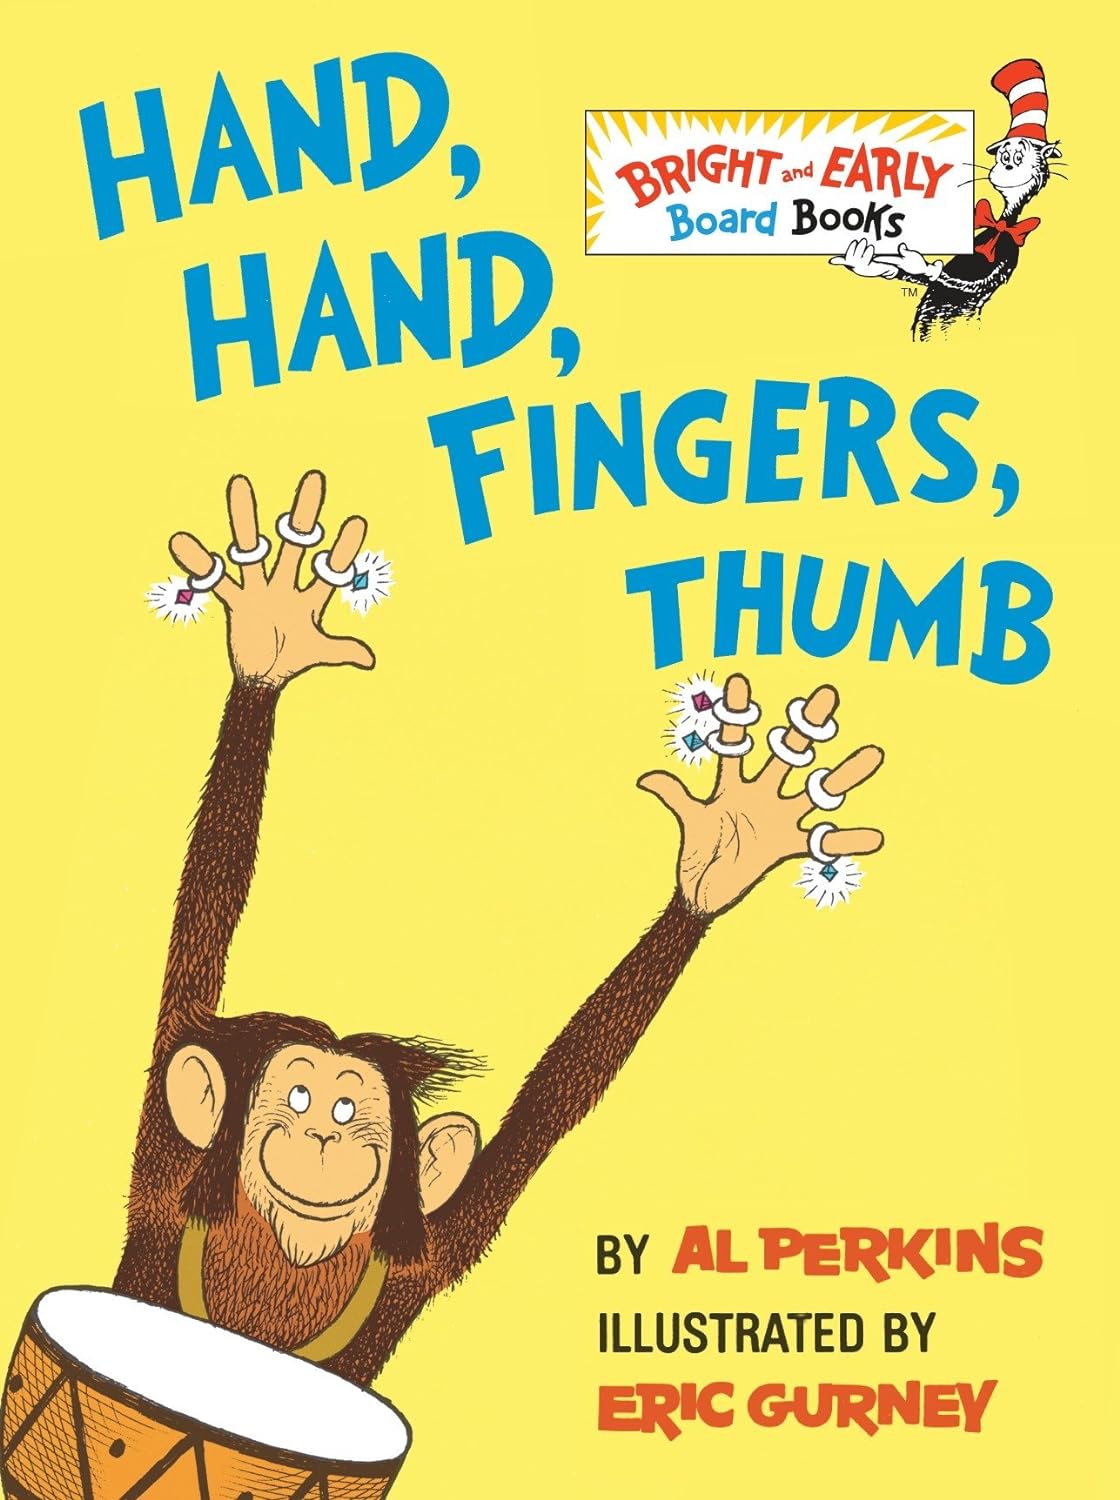 Hand Hand Finger’s, Thumb